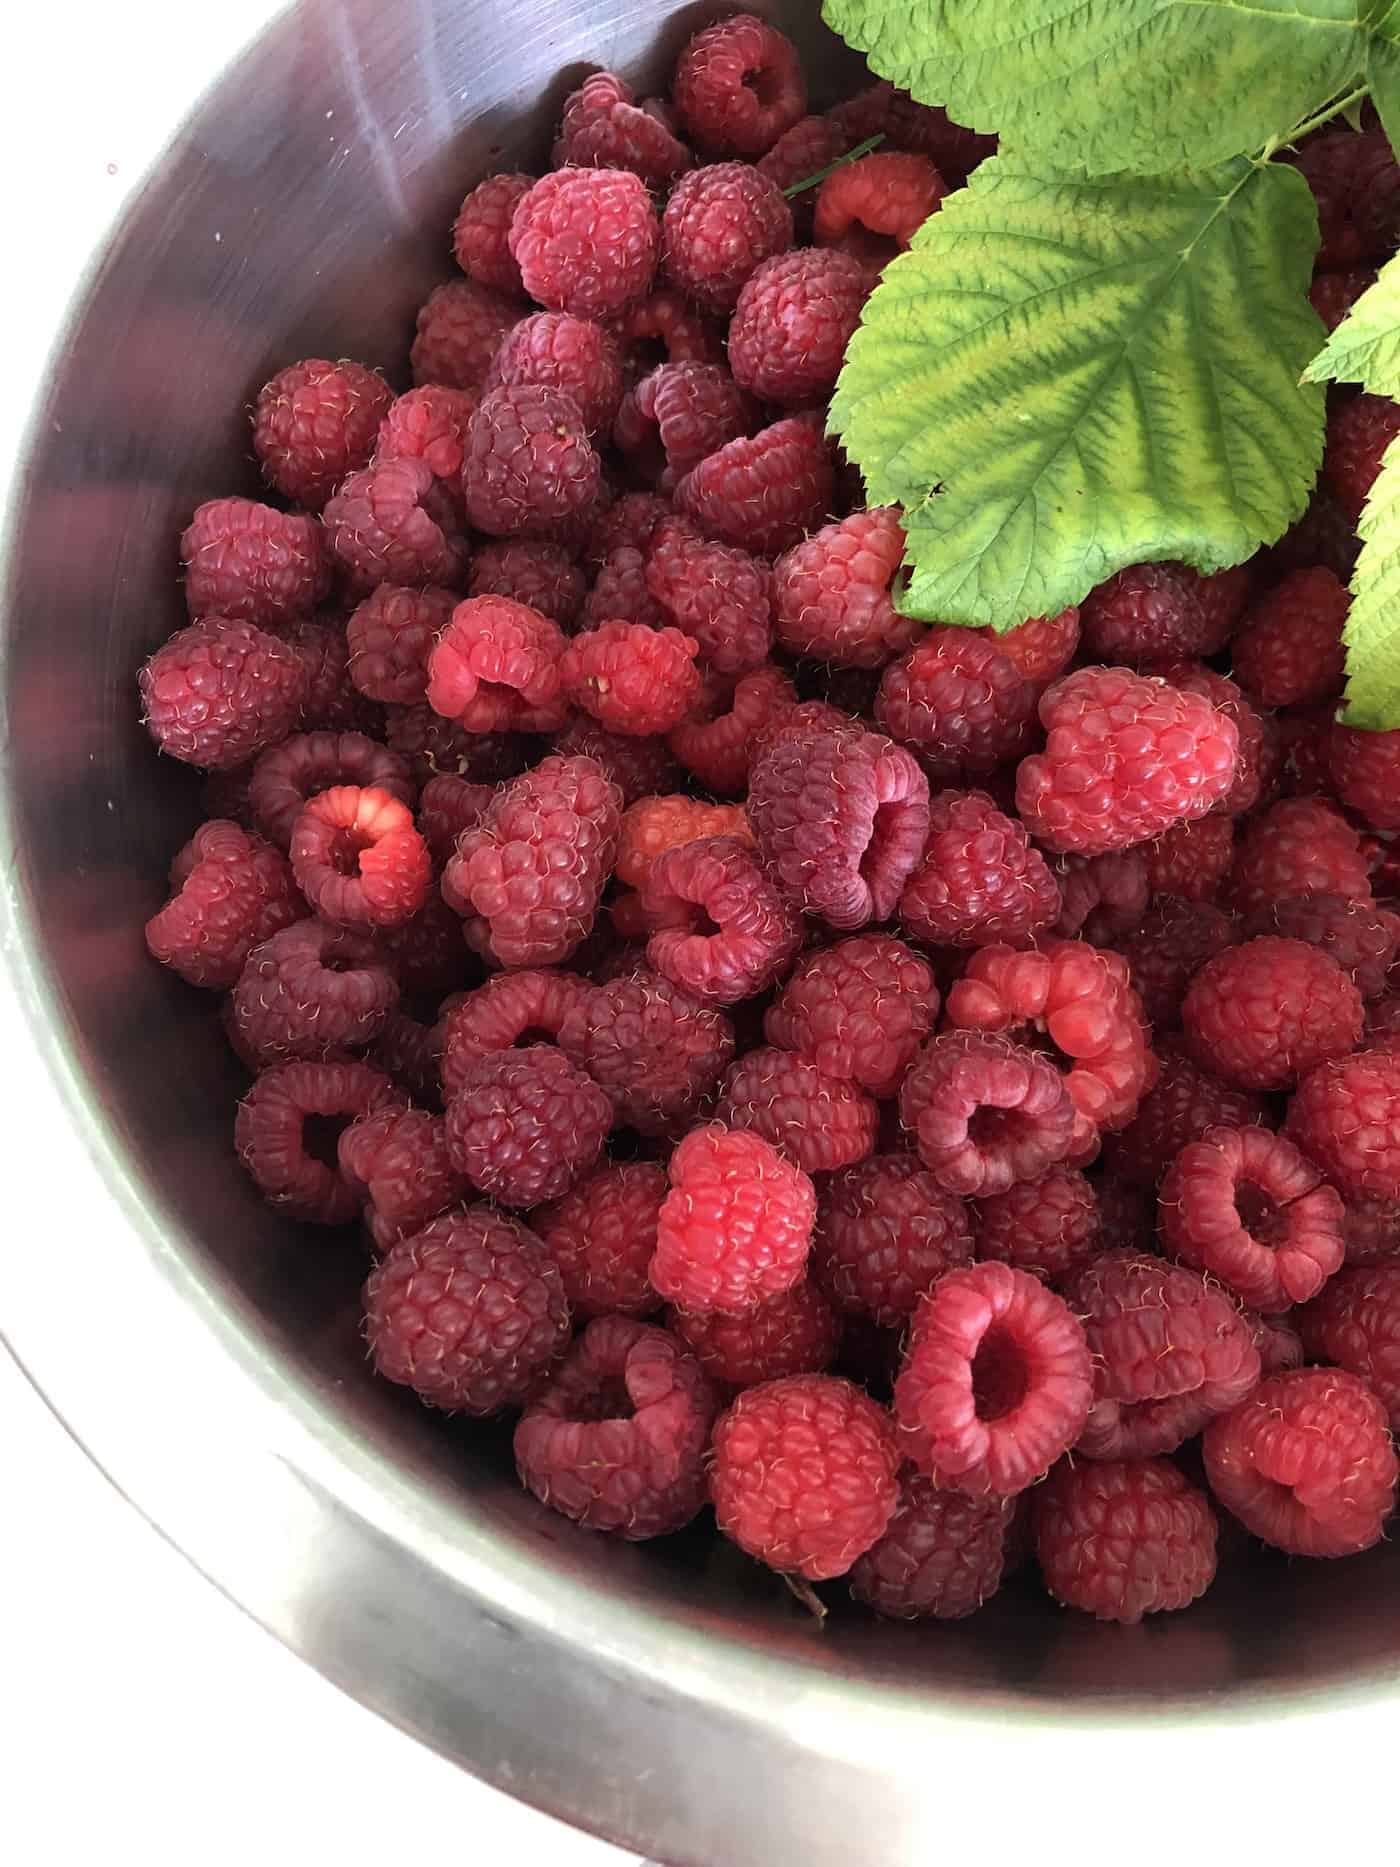 Delicious home grown raspberries